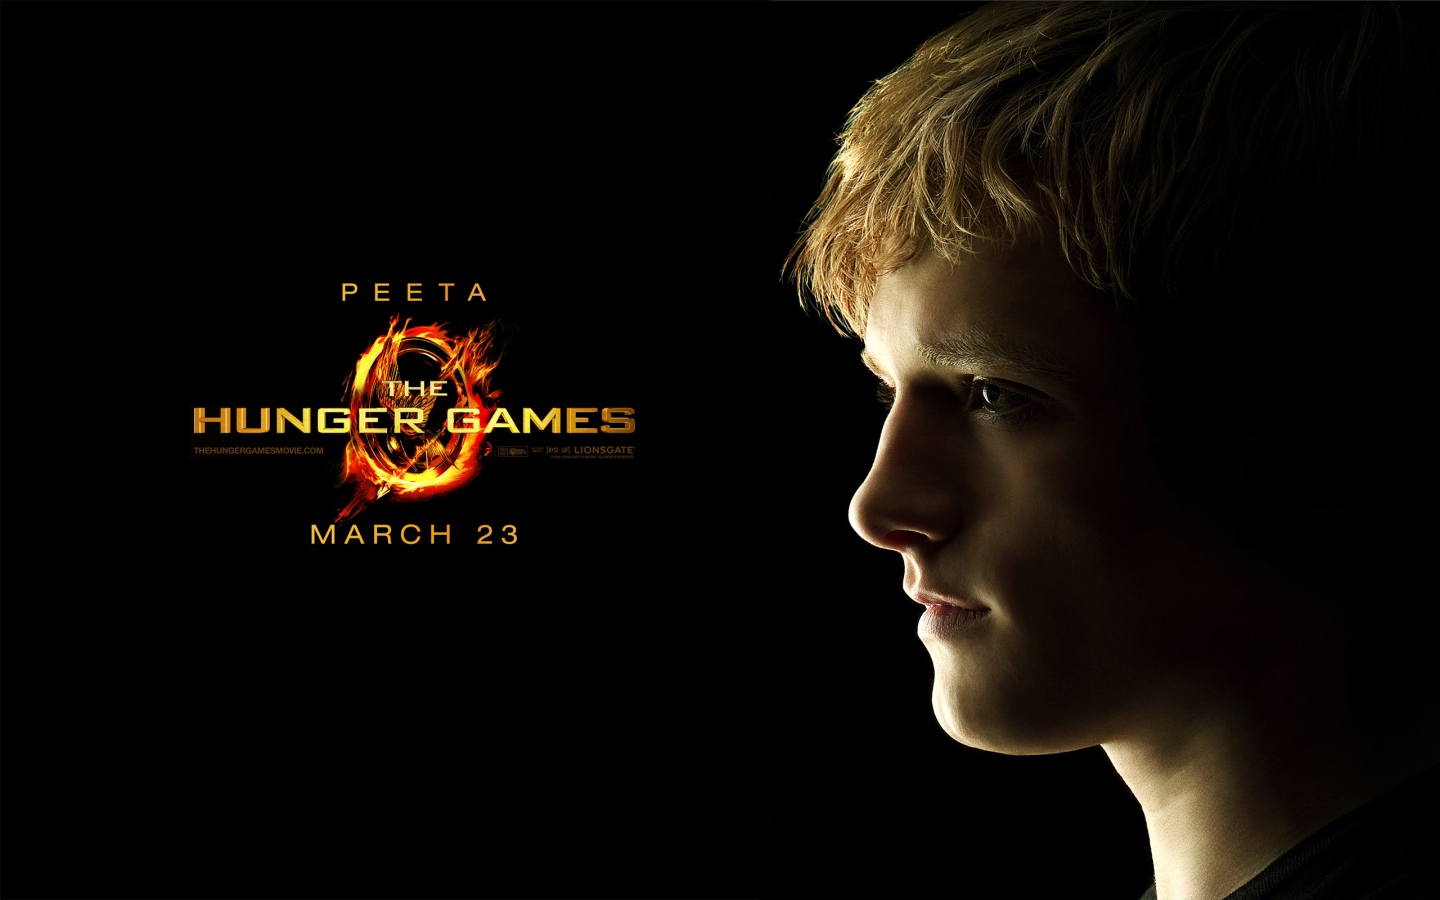 The Hunger Games Peeta for 1440 x 900 widescreen resolution